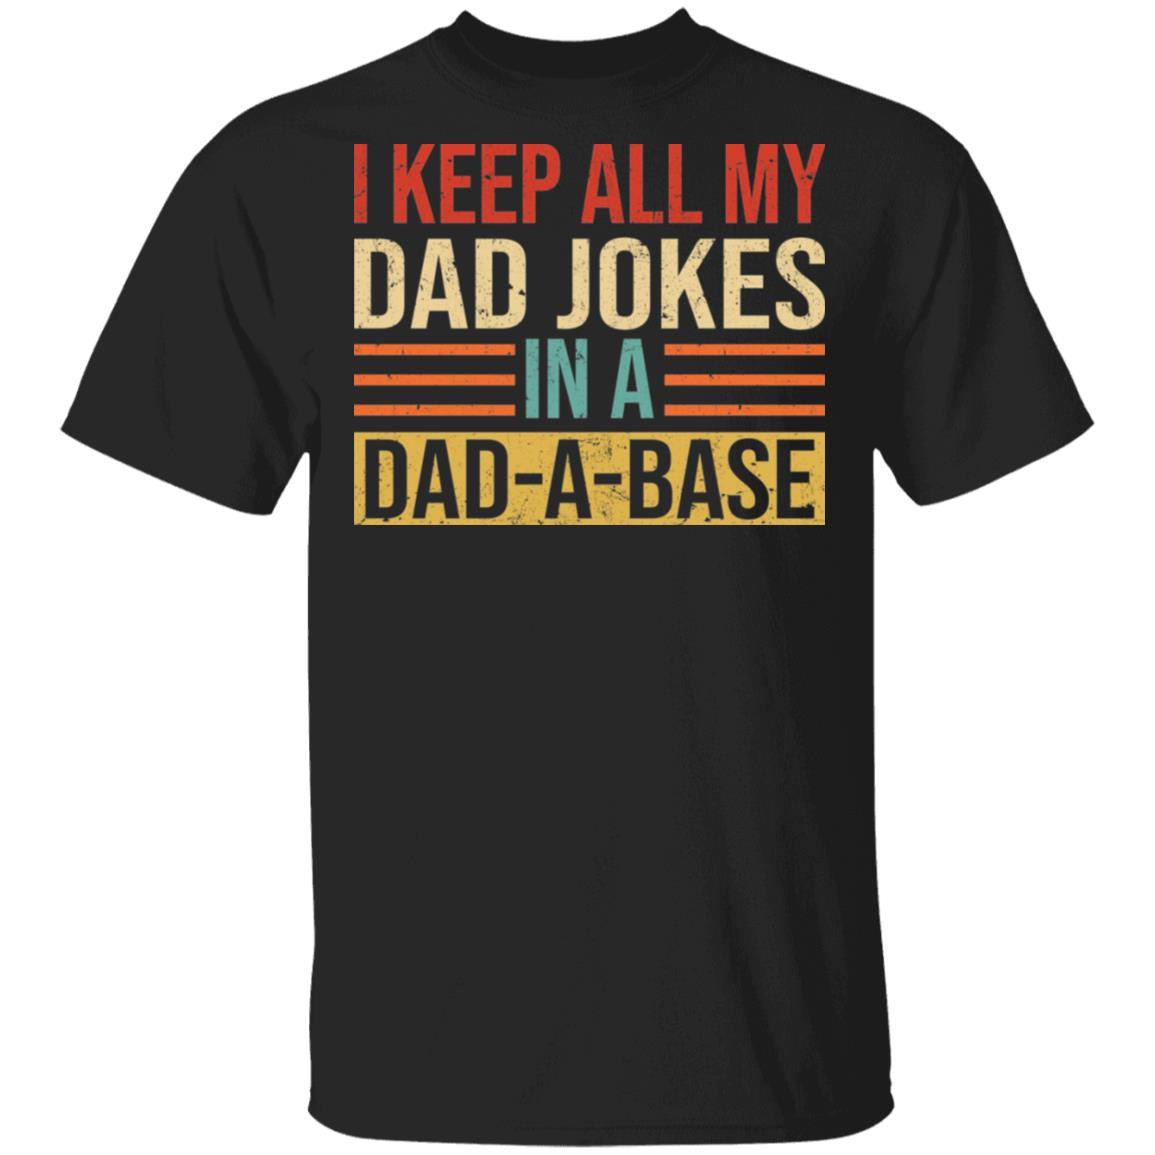 I keep all my dad jokes in a dad a base shirt - Bucktee.com